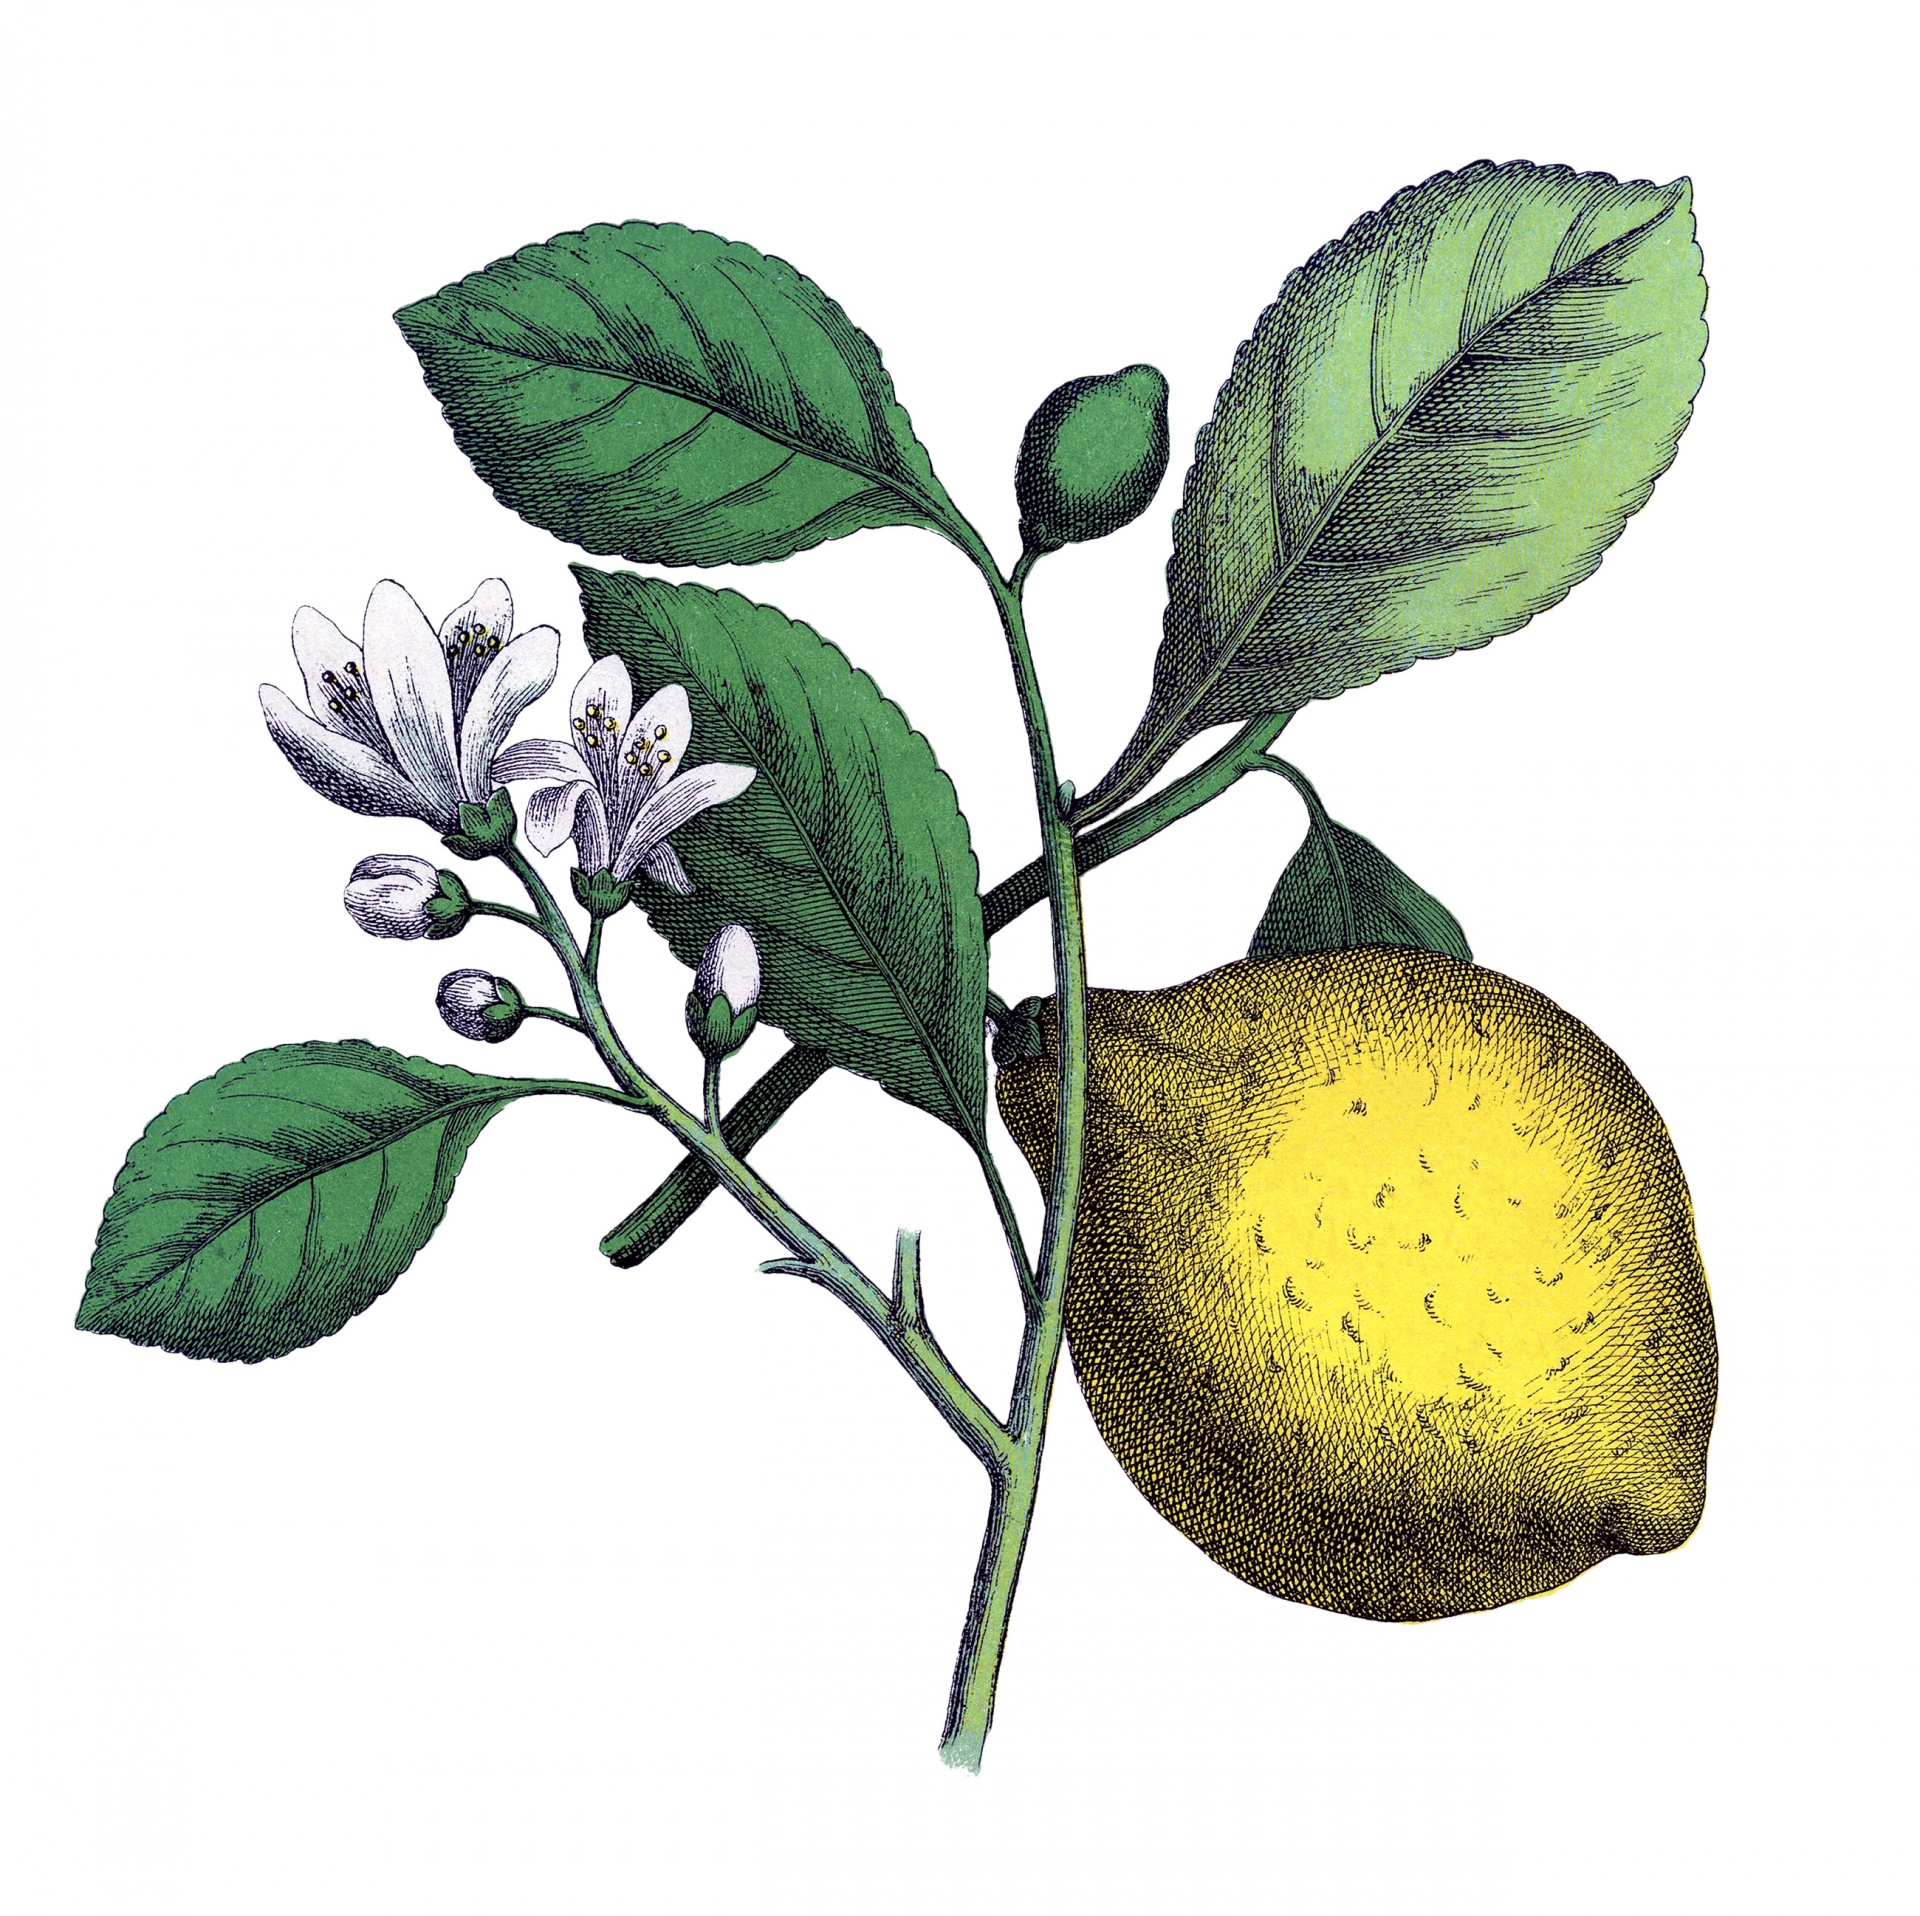 Vintage botanical art illustration of lemons, fruit of the lemon tree clipart on white background with leaves and blossom flowers